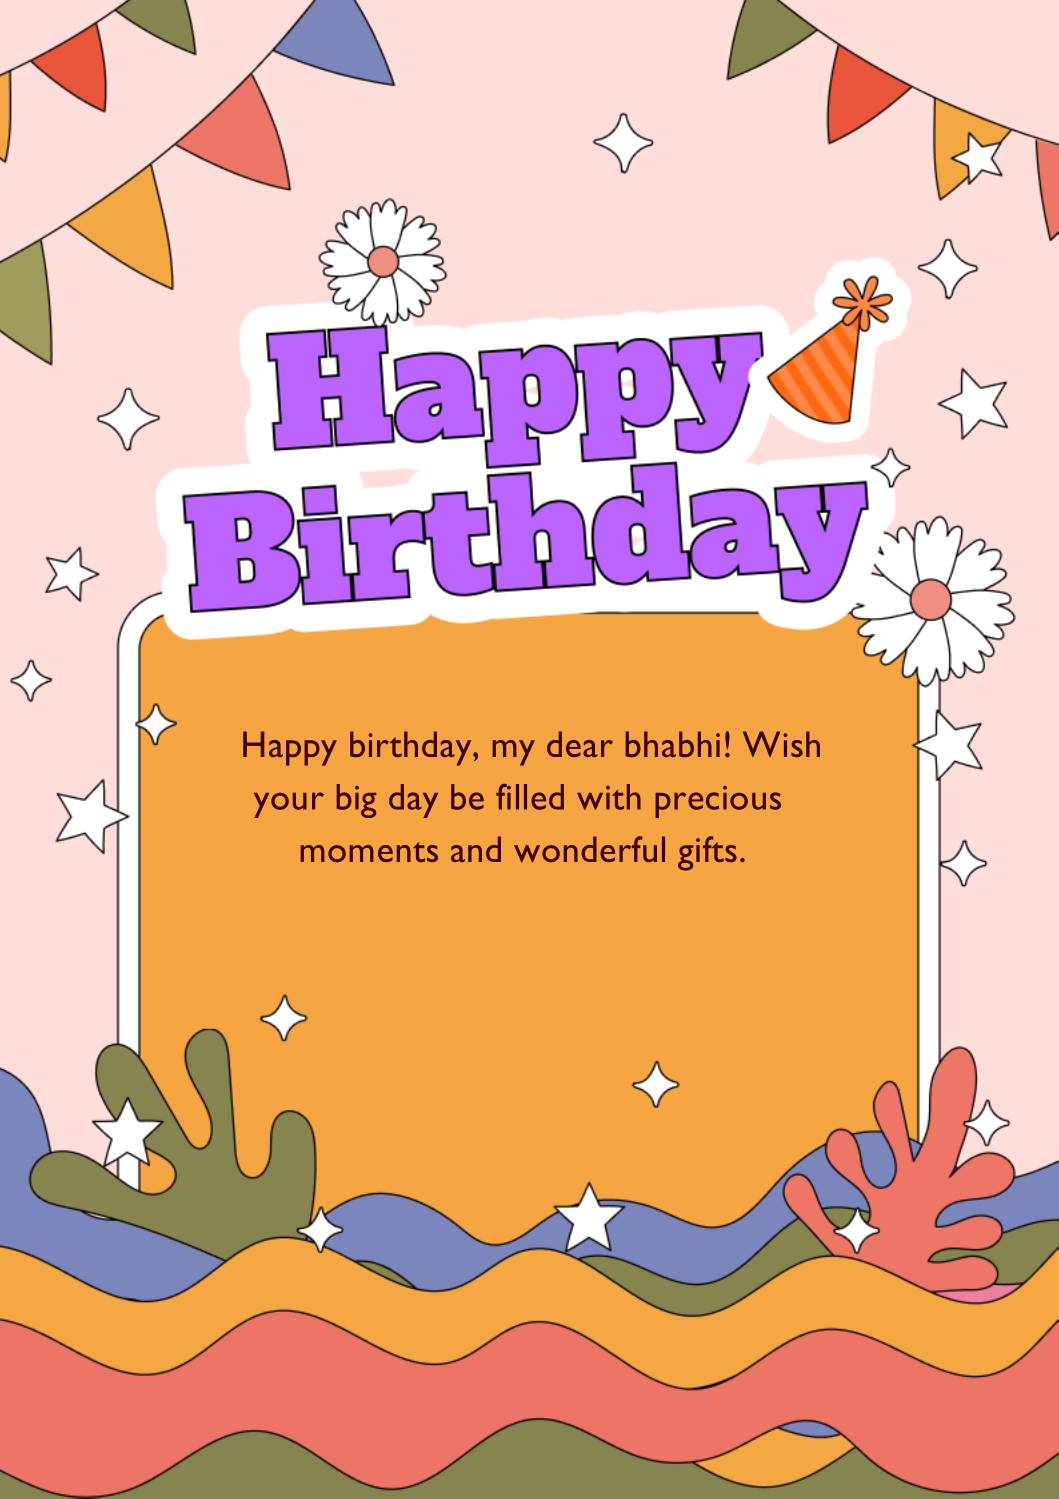 Birthday wishes for bhabhi card 2